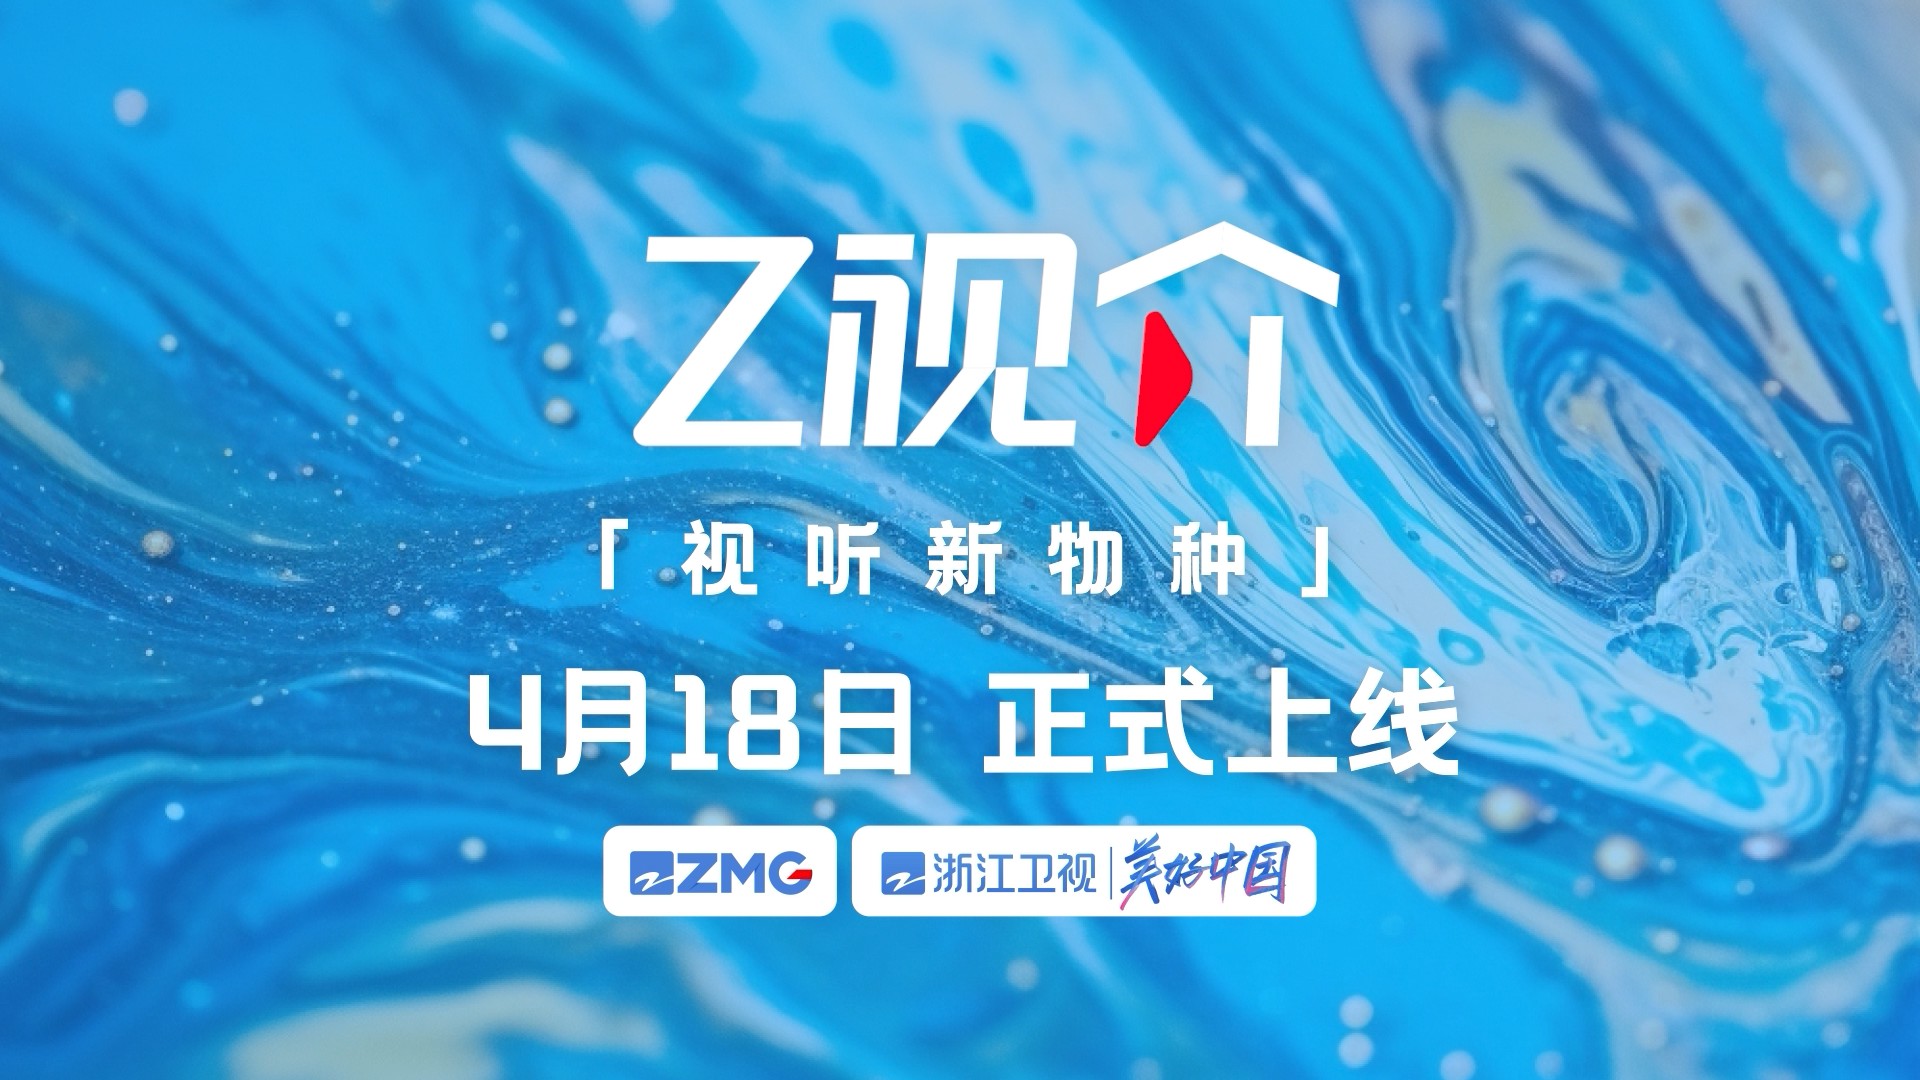 Z视介客户端上线 浙江重大文化传播平台启动